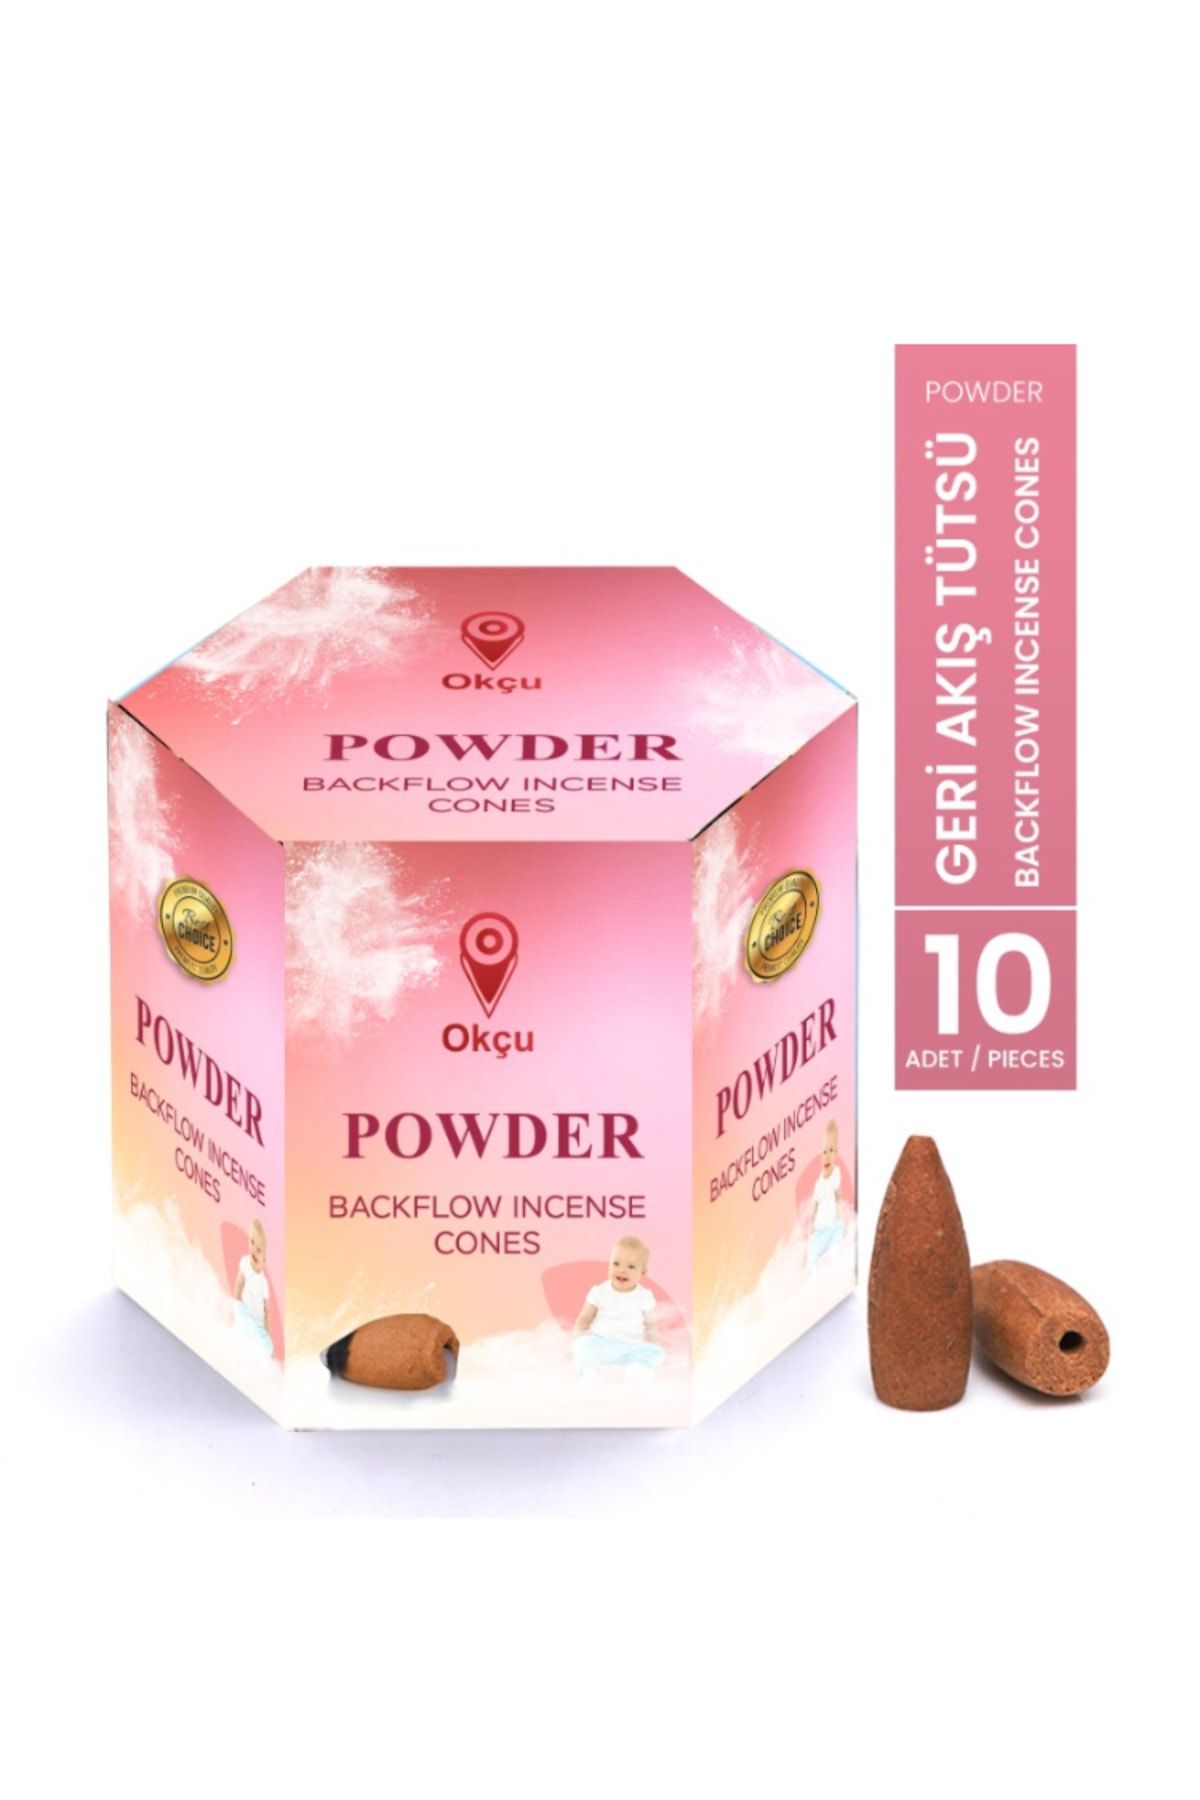 Okçu Powder Pudra Kokusu Tütsü Geri Akış Şelale Backflow Incense Cones 10 Adet / Pieces